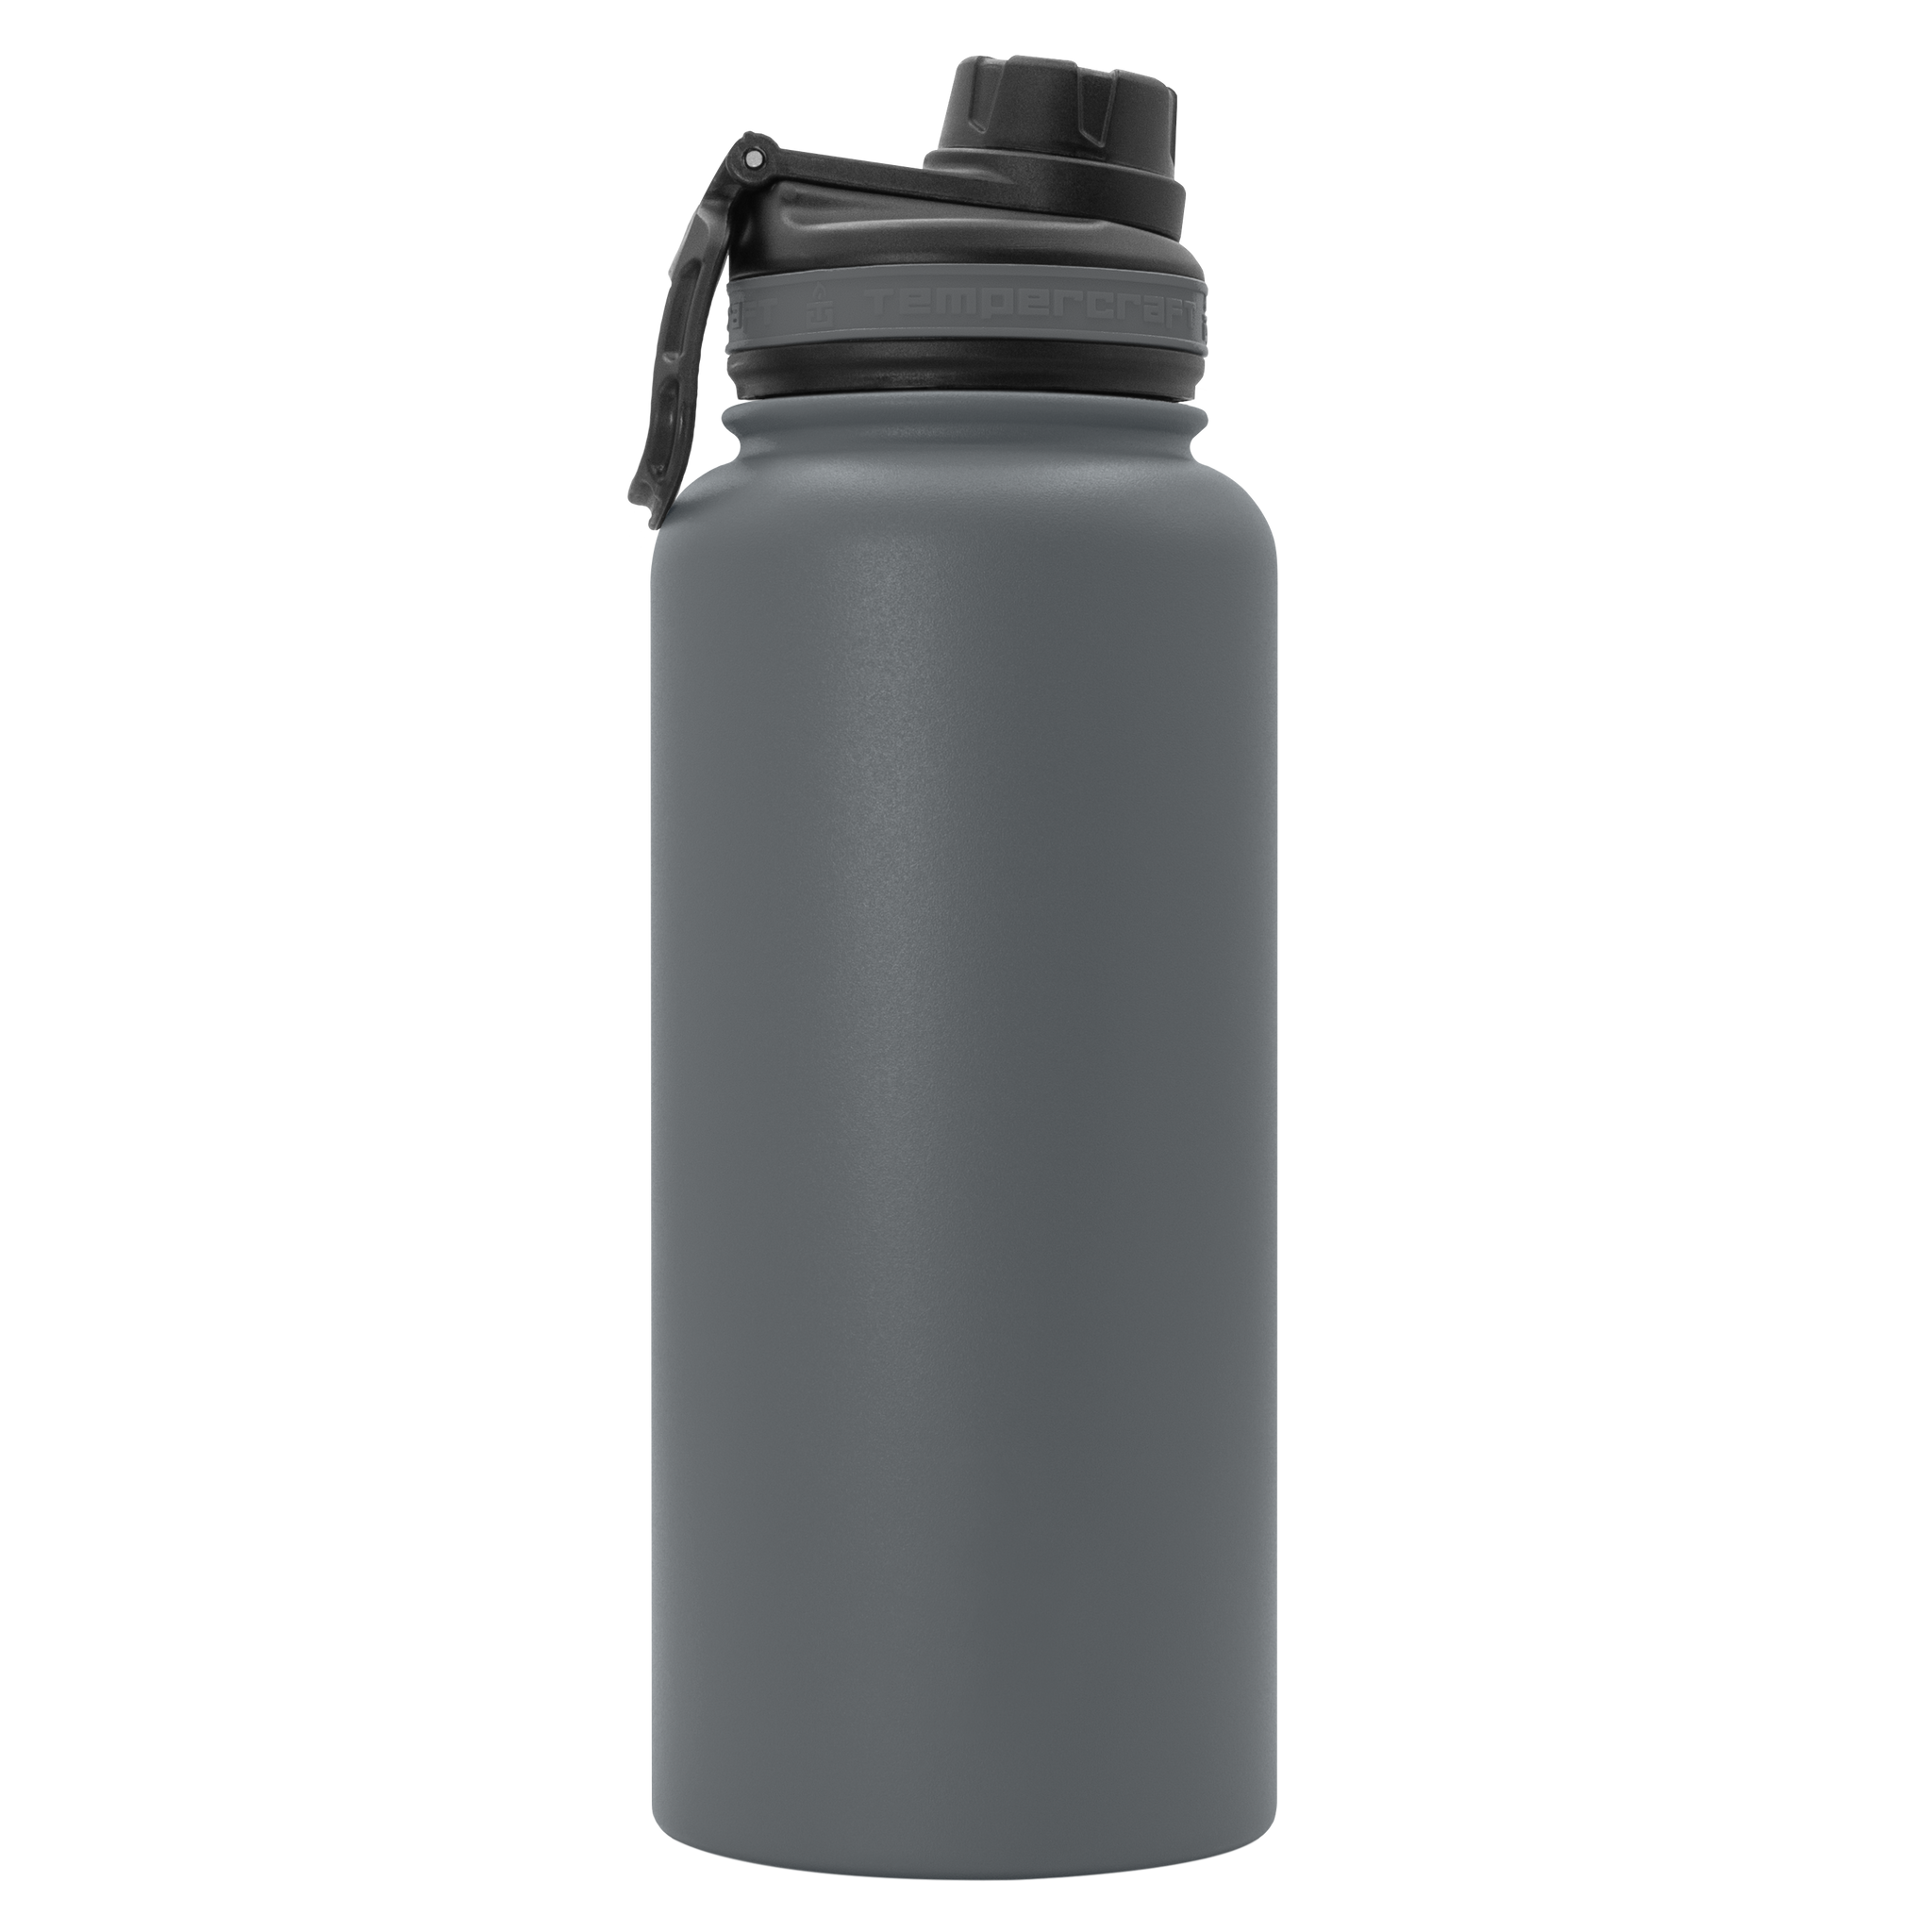 Tempercraft 32 oz. Water Bottle